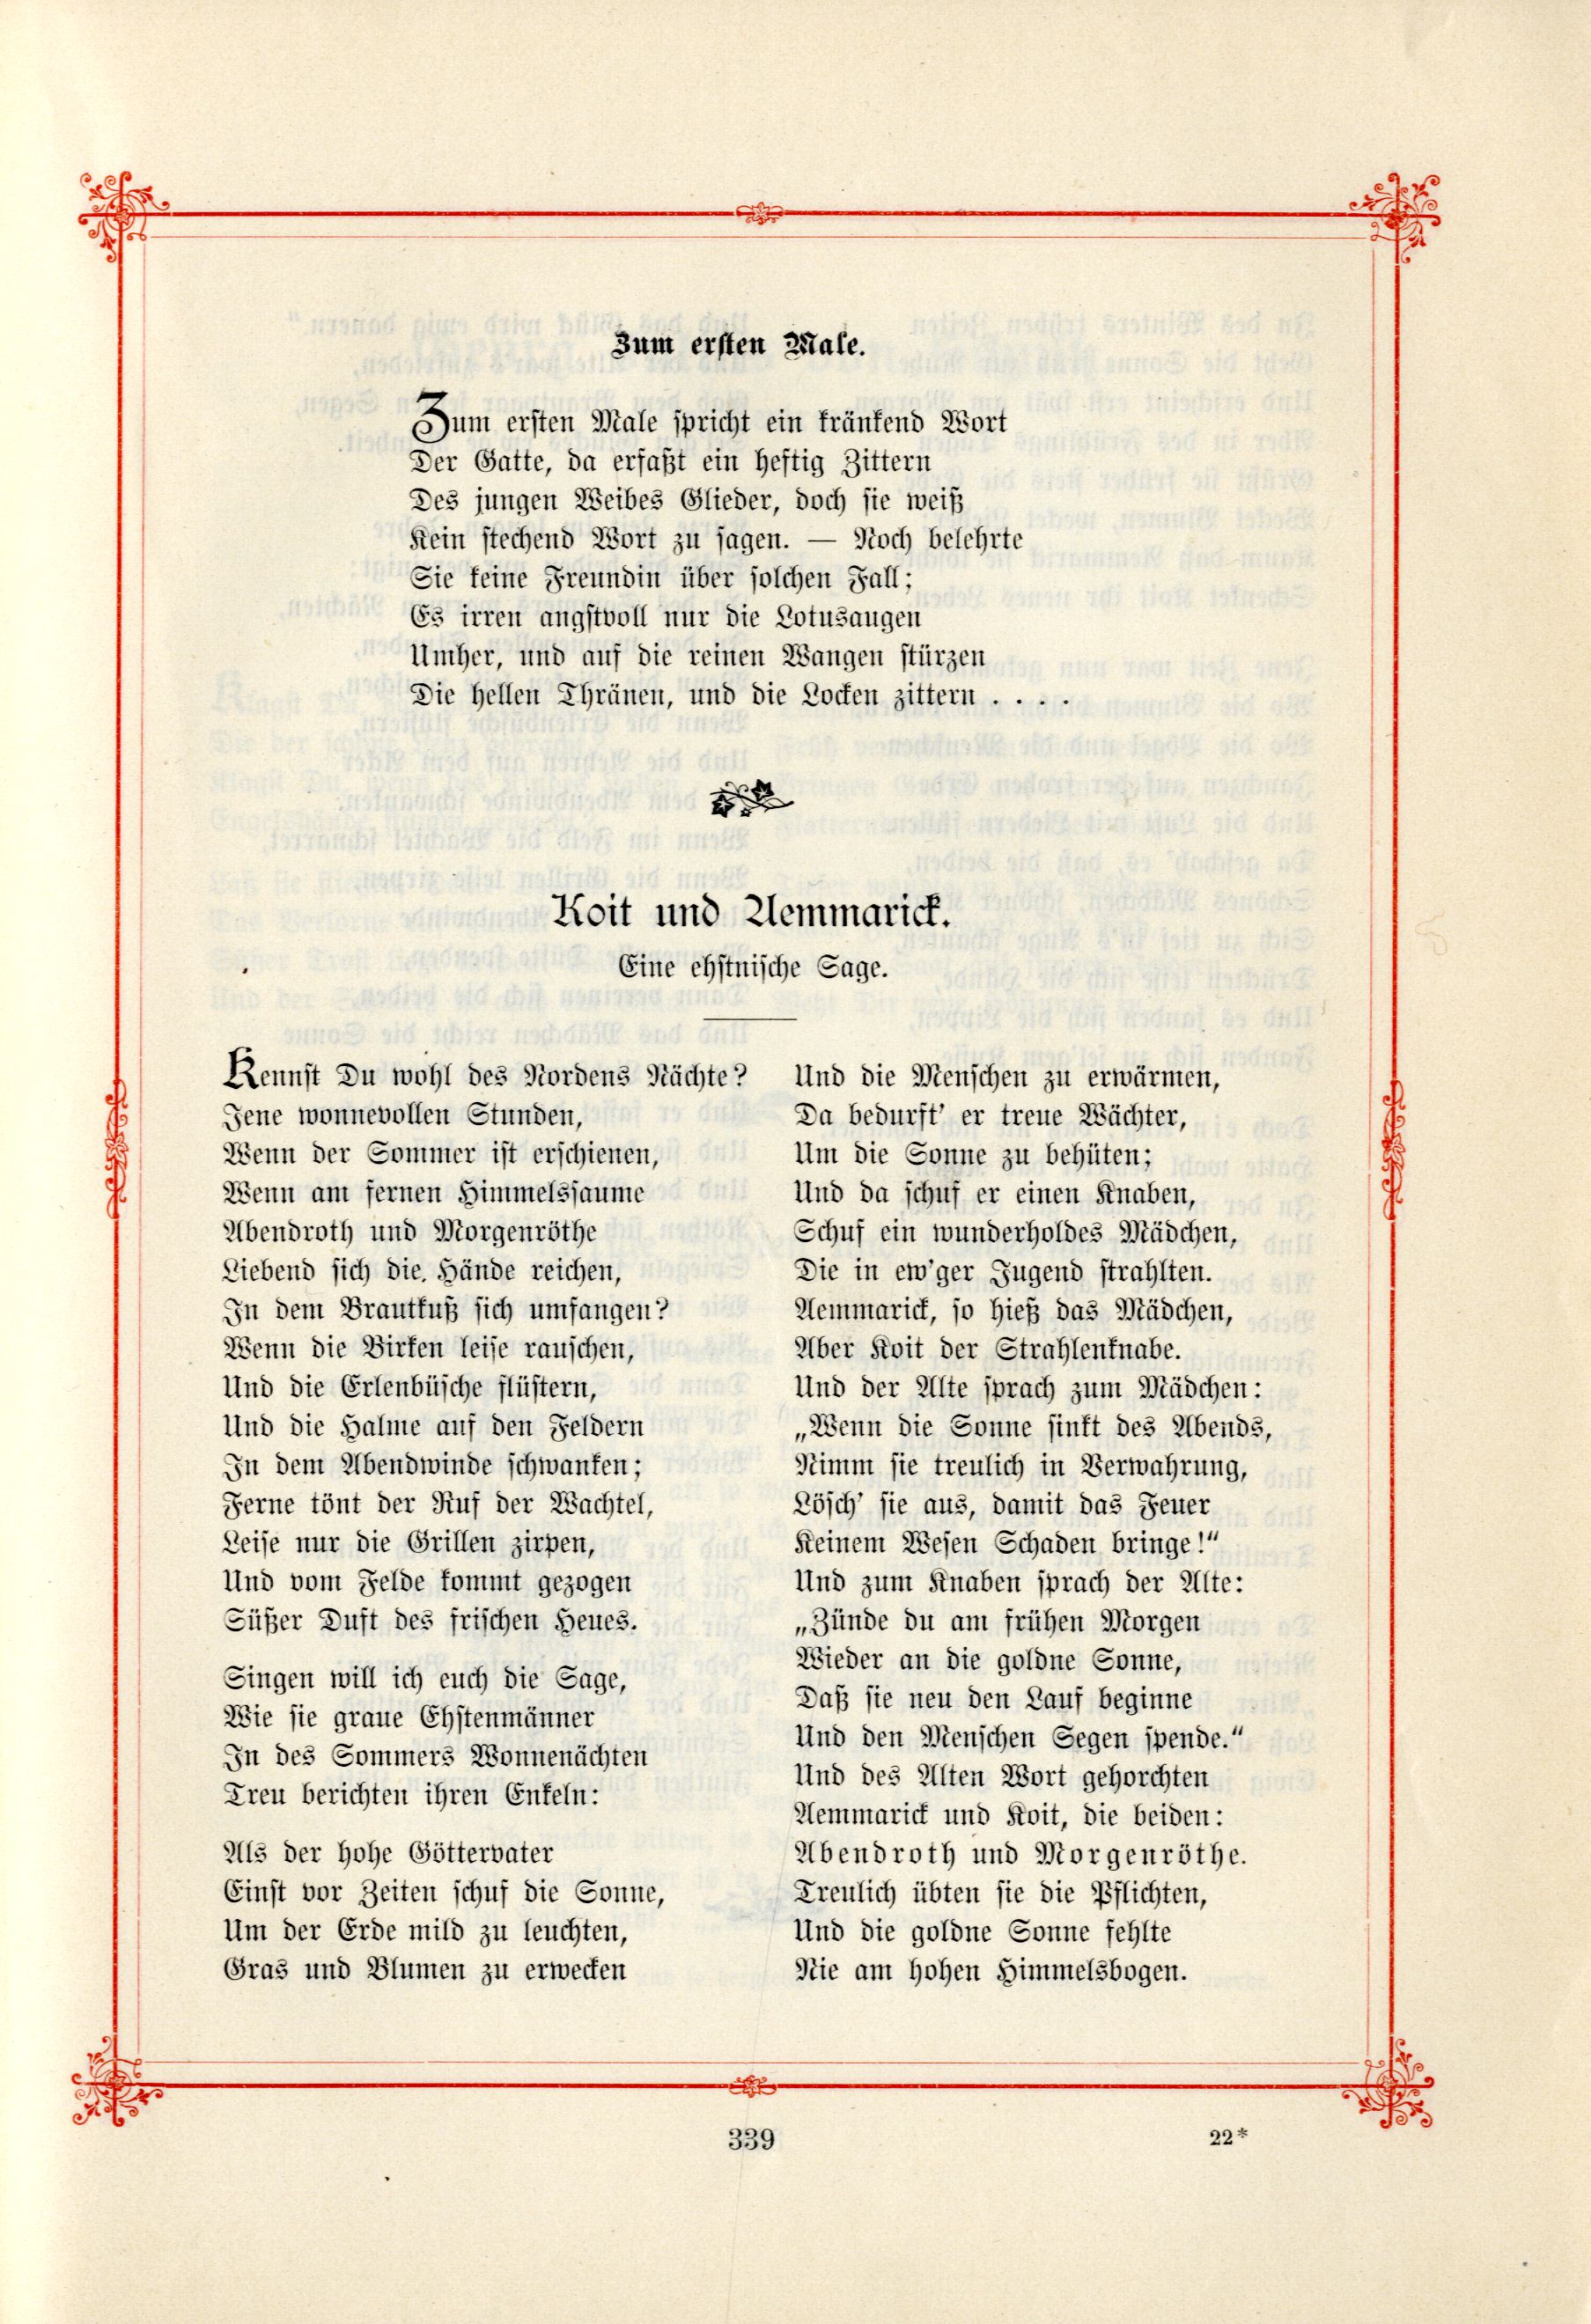 Koit und Aemmarick (1895) | 1. (339) Main body of text